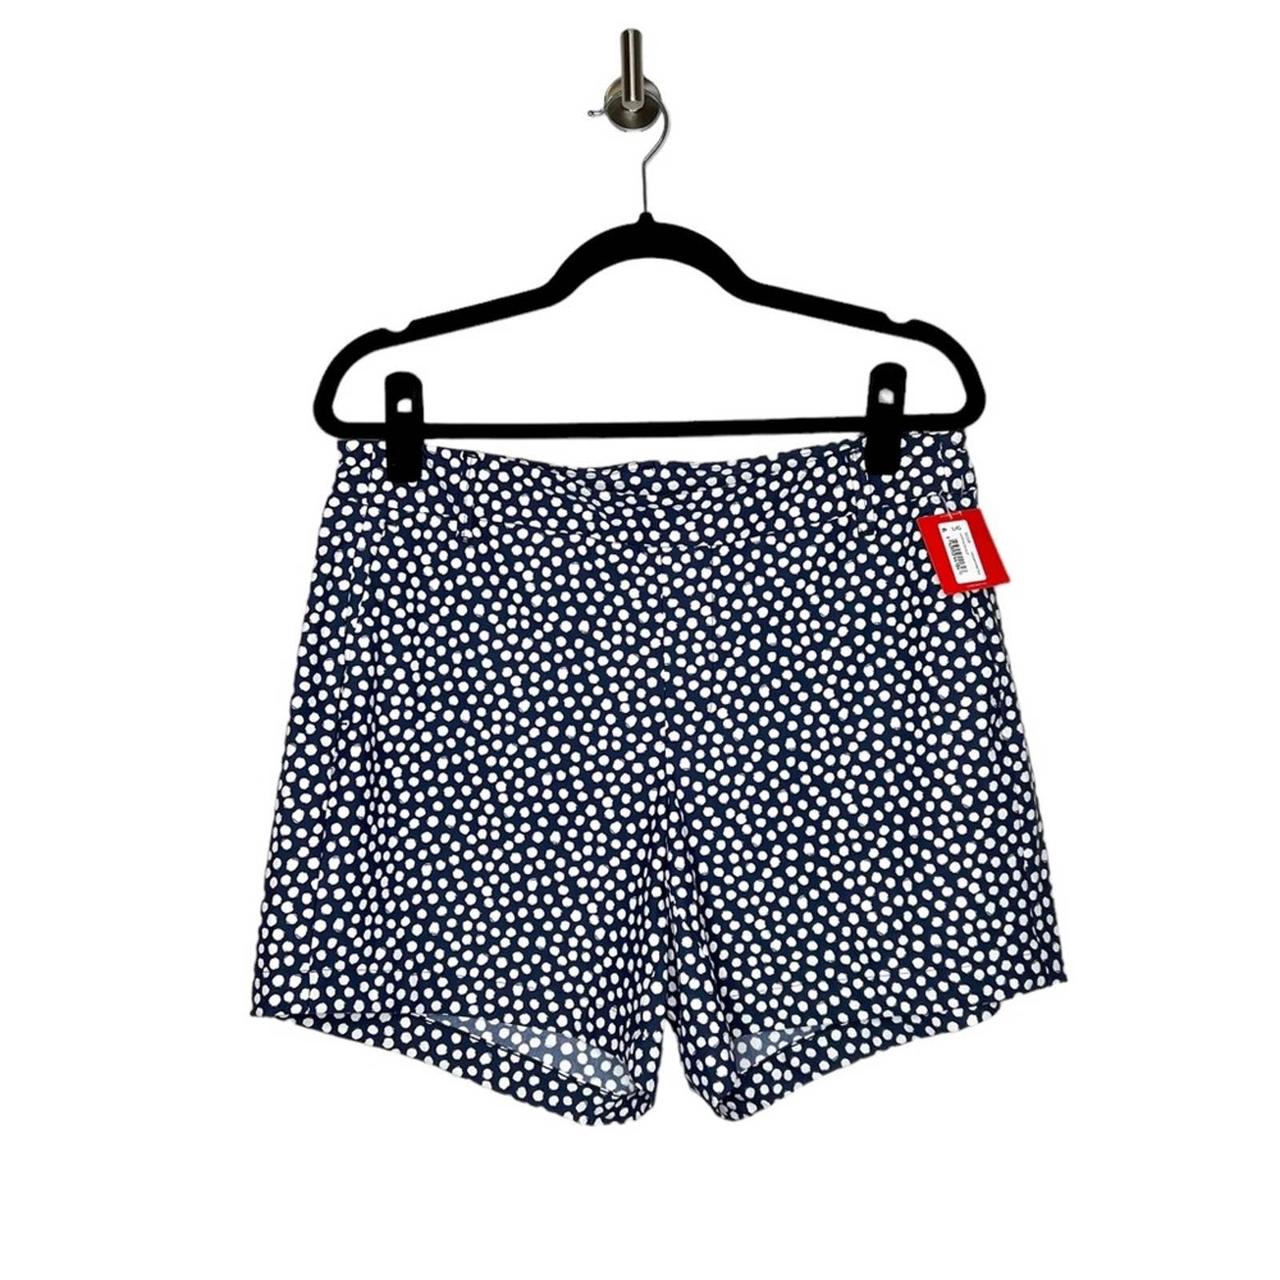 Spanx Women's Sunshine Shorts Polka Dot - Depop